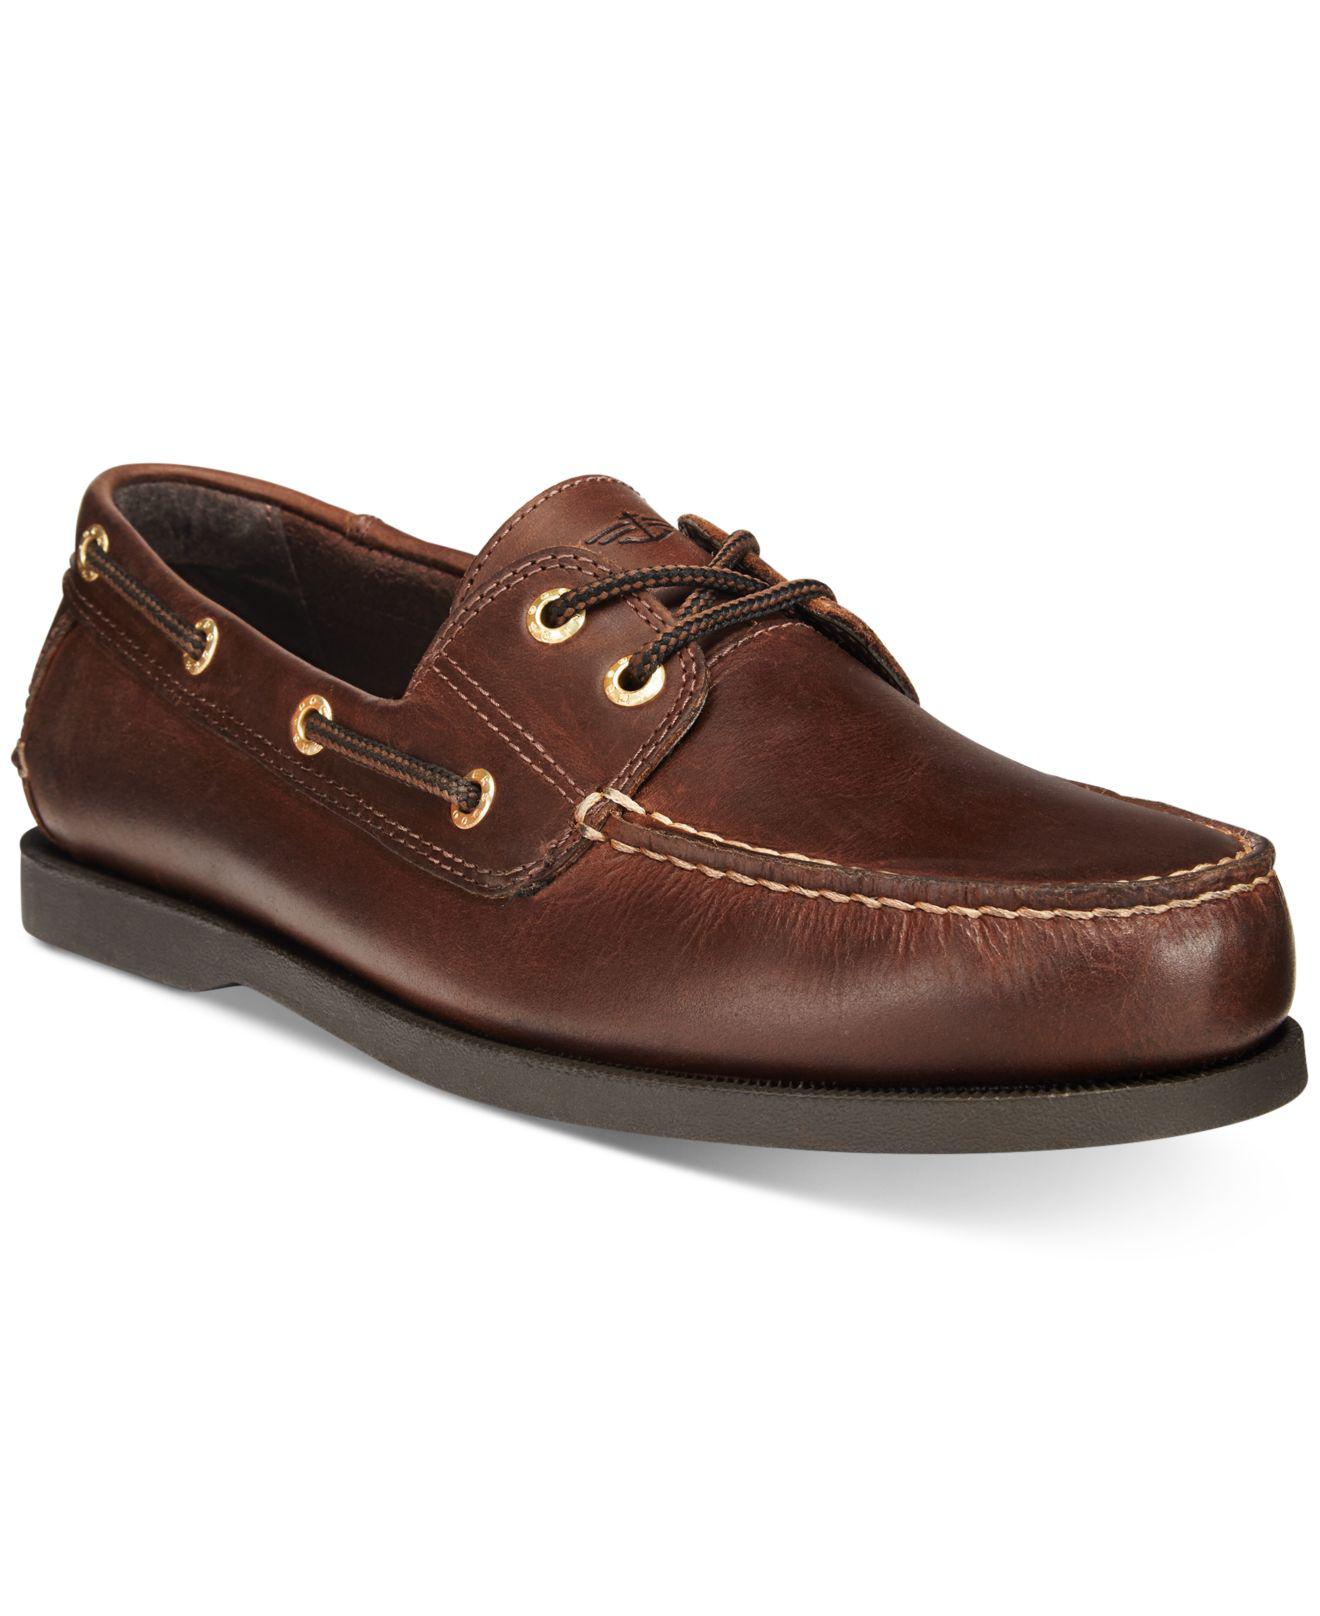 Dockers Vargas Boat Shoes in Brown for Men - Lyst